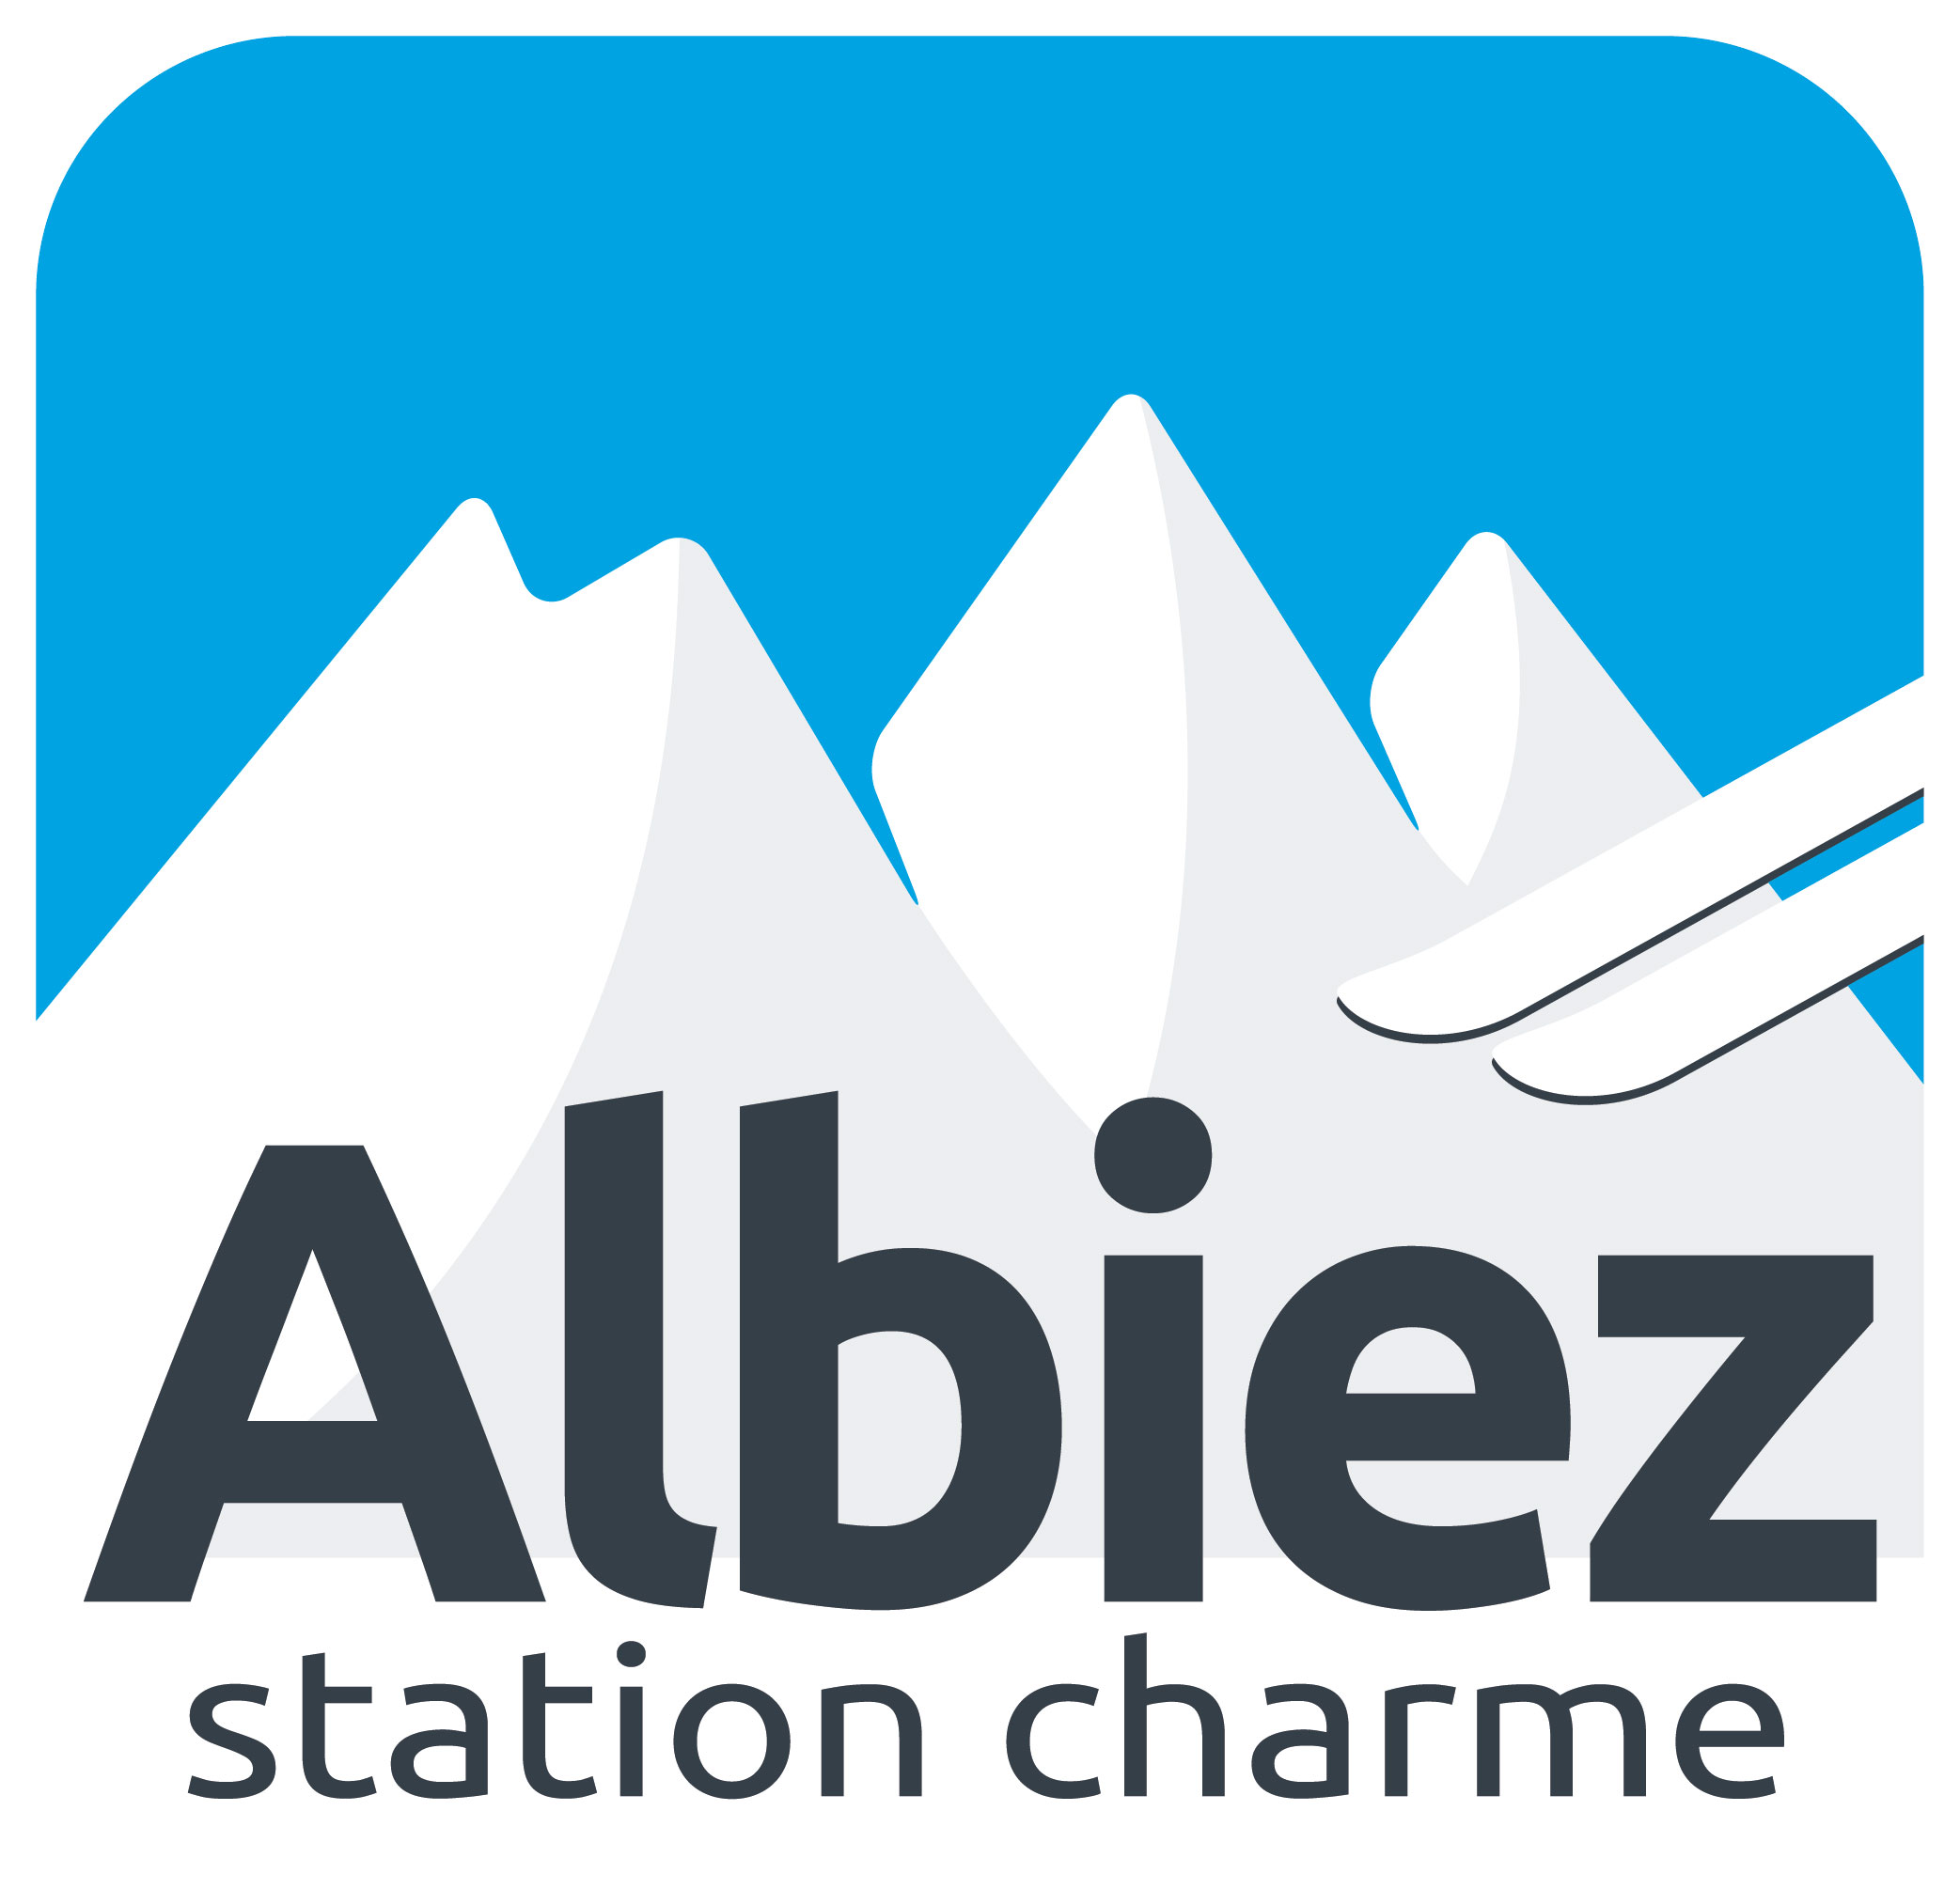 Ski resort Albiez Montrond